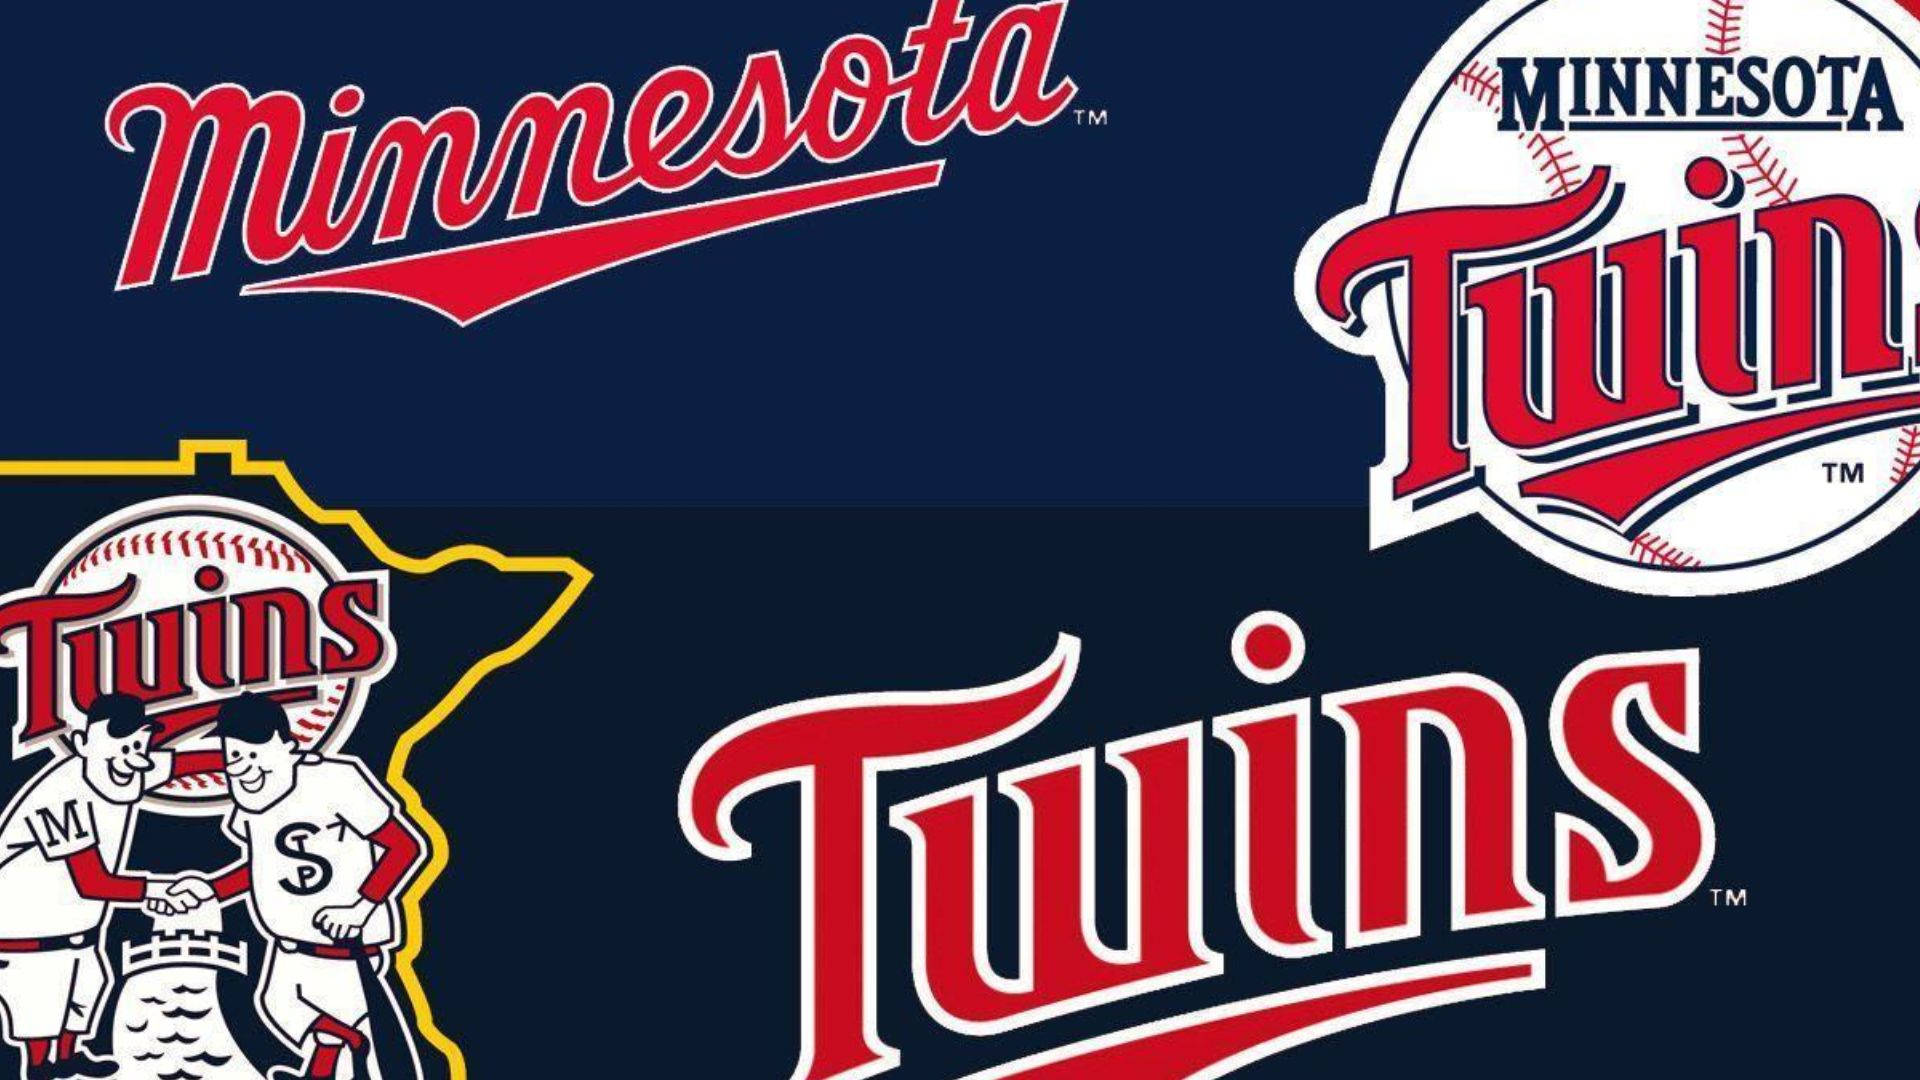 Minnesota Twins Logos And Wordmarks